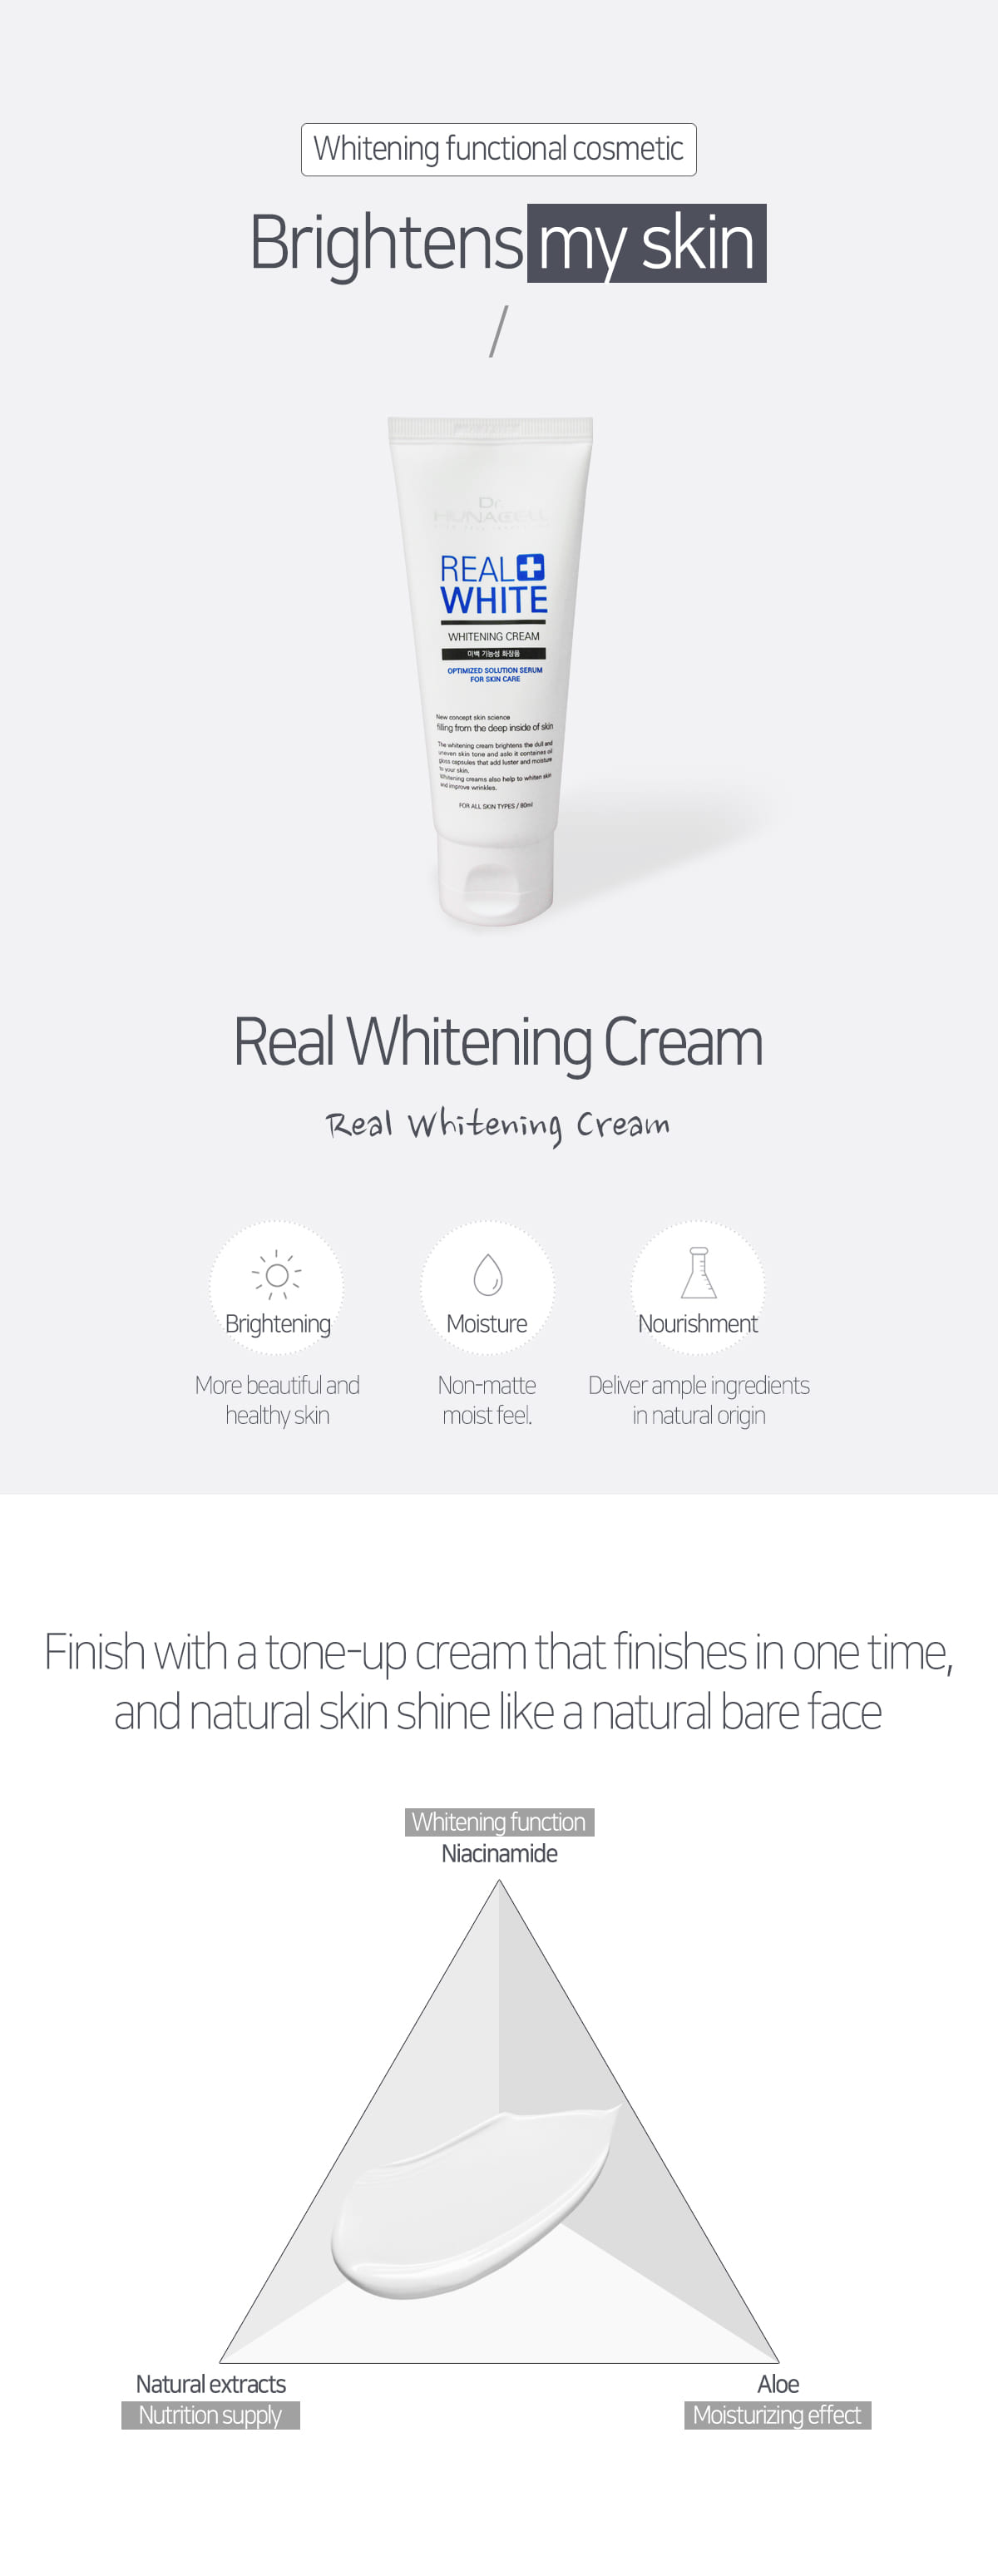 Real Whitening Cream (80ml) Skin care  Moisturizing  Whitening improvement functional cosmetics  Covering  Protection